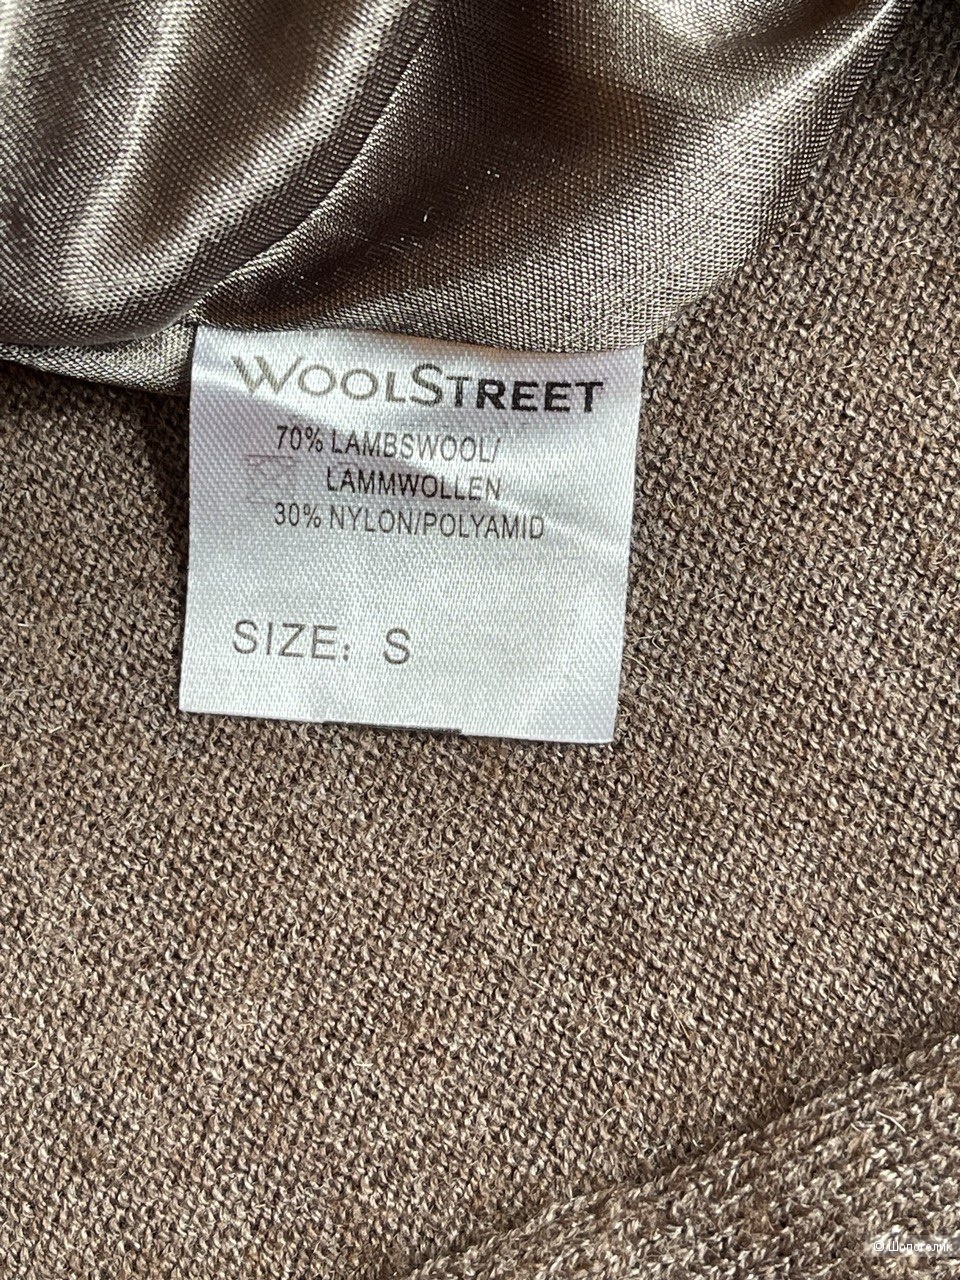 Юбка шерсть WoolStreet размер S/42-44